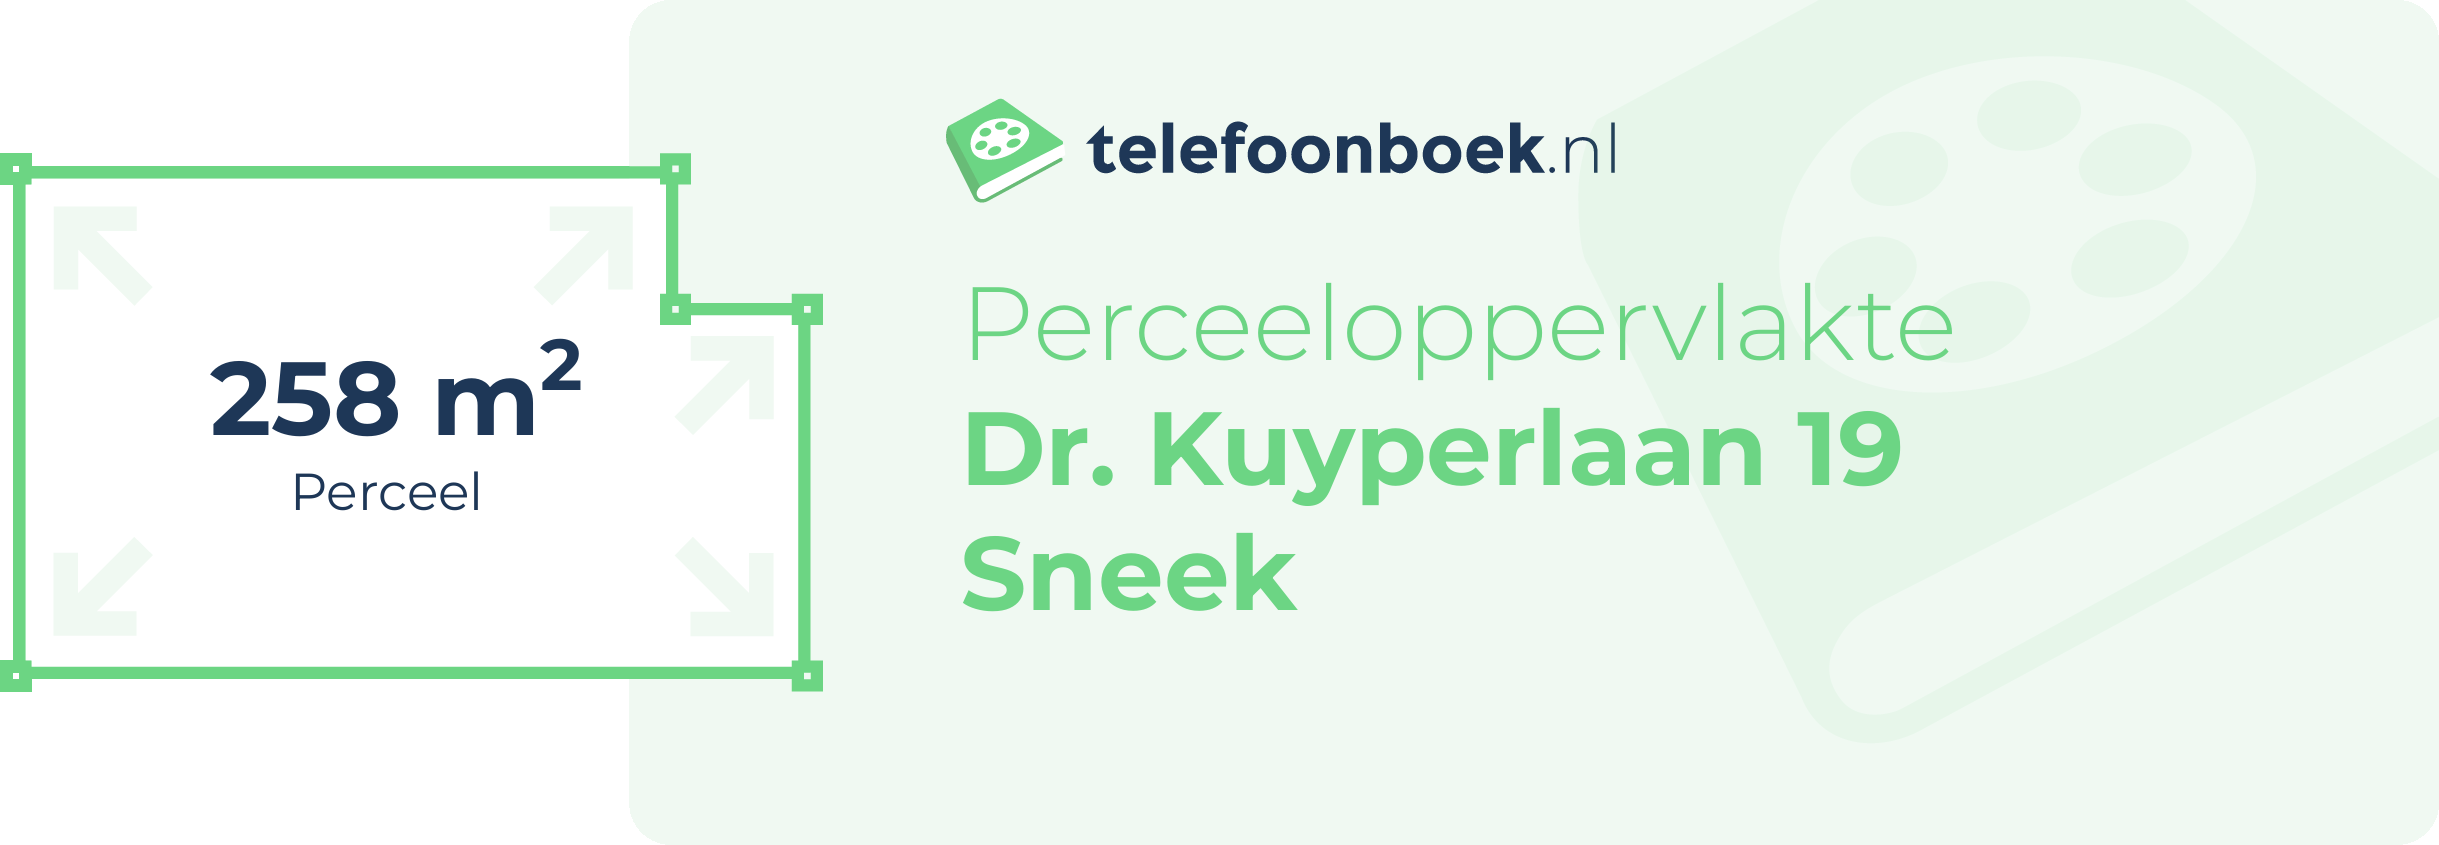 Perceeloppervlakte Dr. Kuyperlaan 19 Sneek